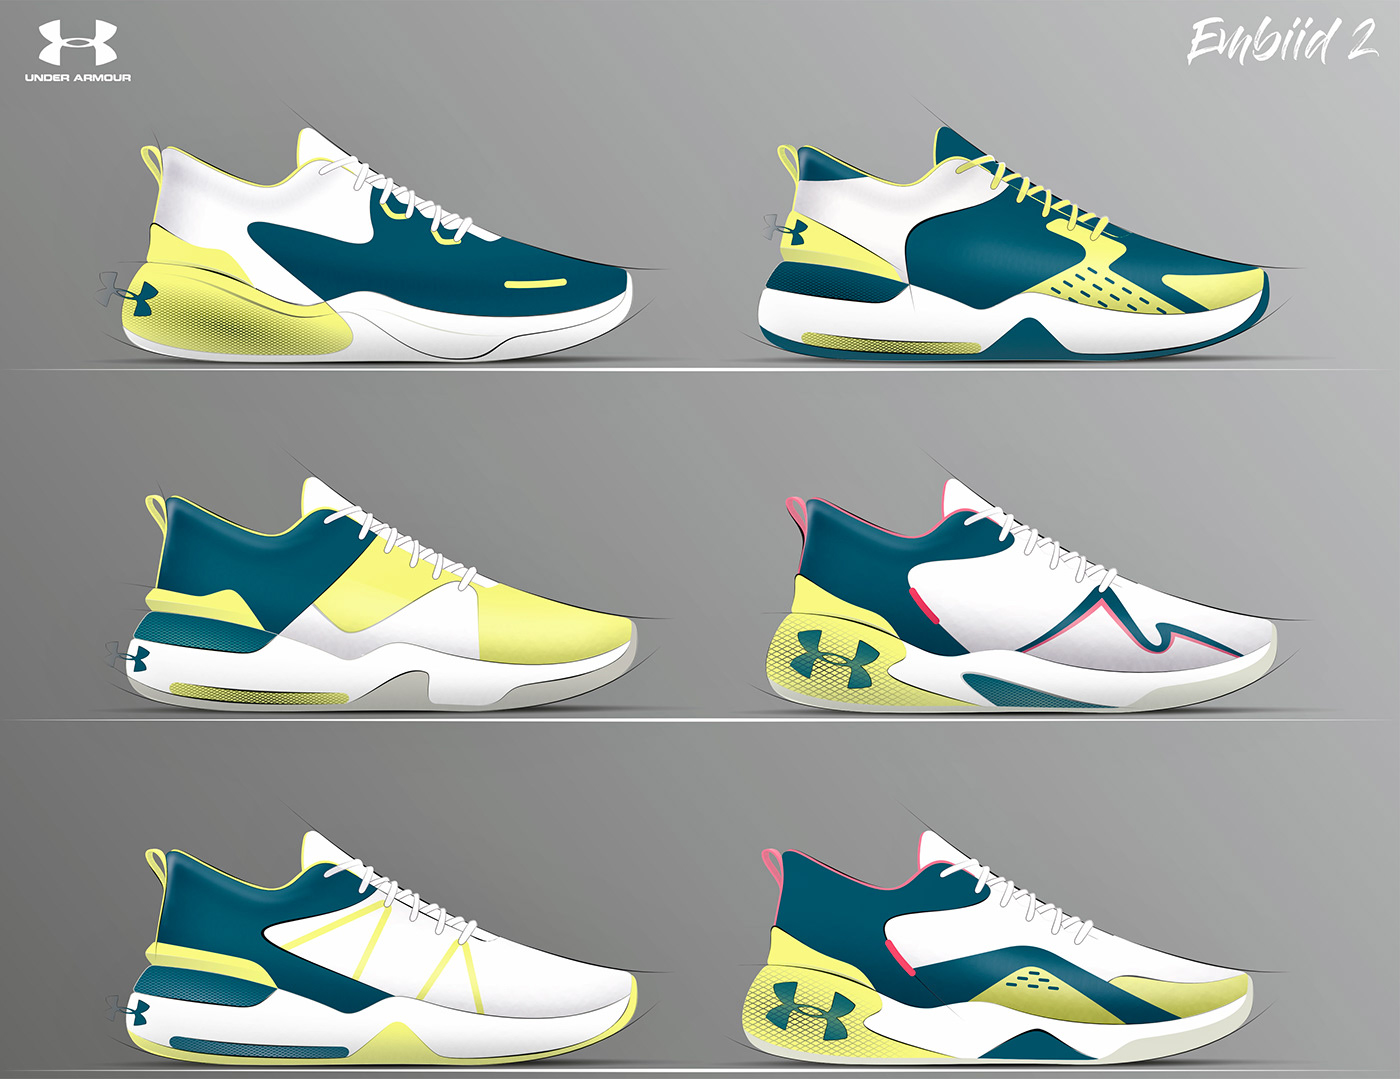 sneaker footwear concept Under Armour mvp footwear design concept design Joel Embiid